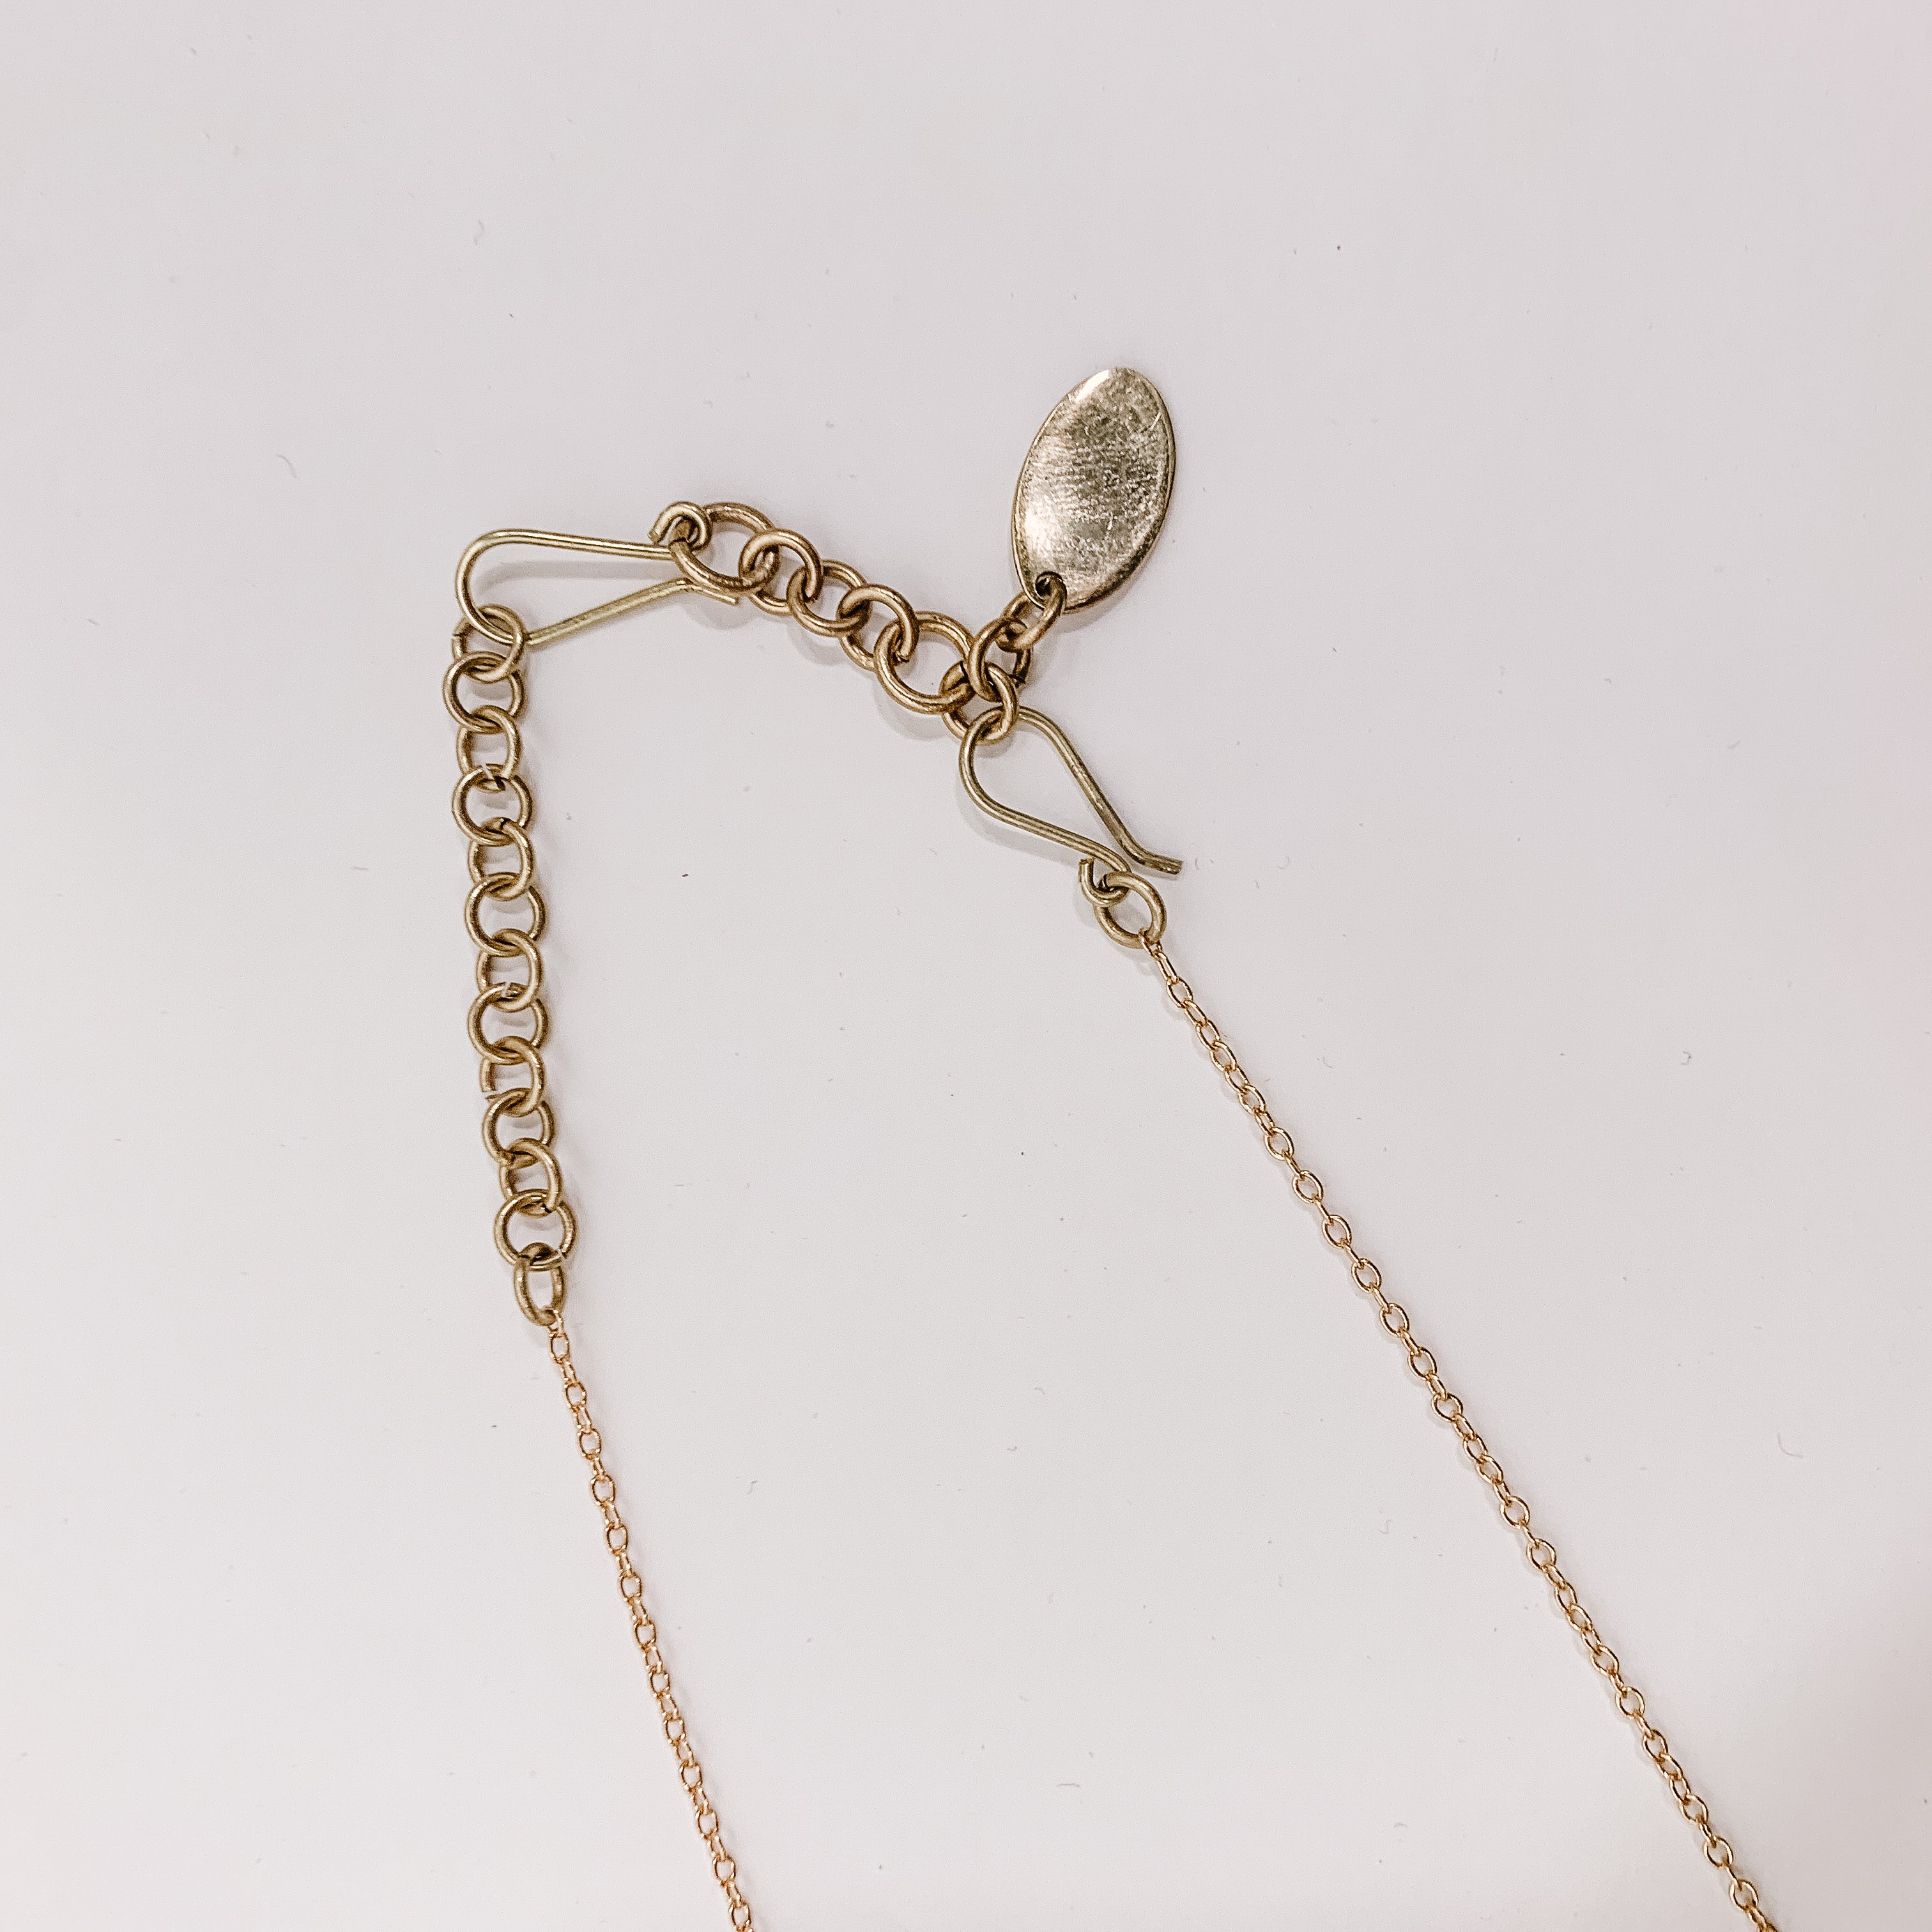 JustOne's brass one inch necklace extender handmade in Kenya